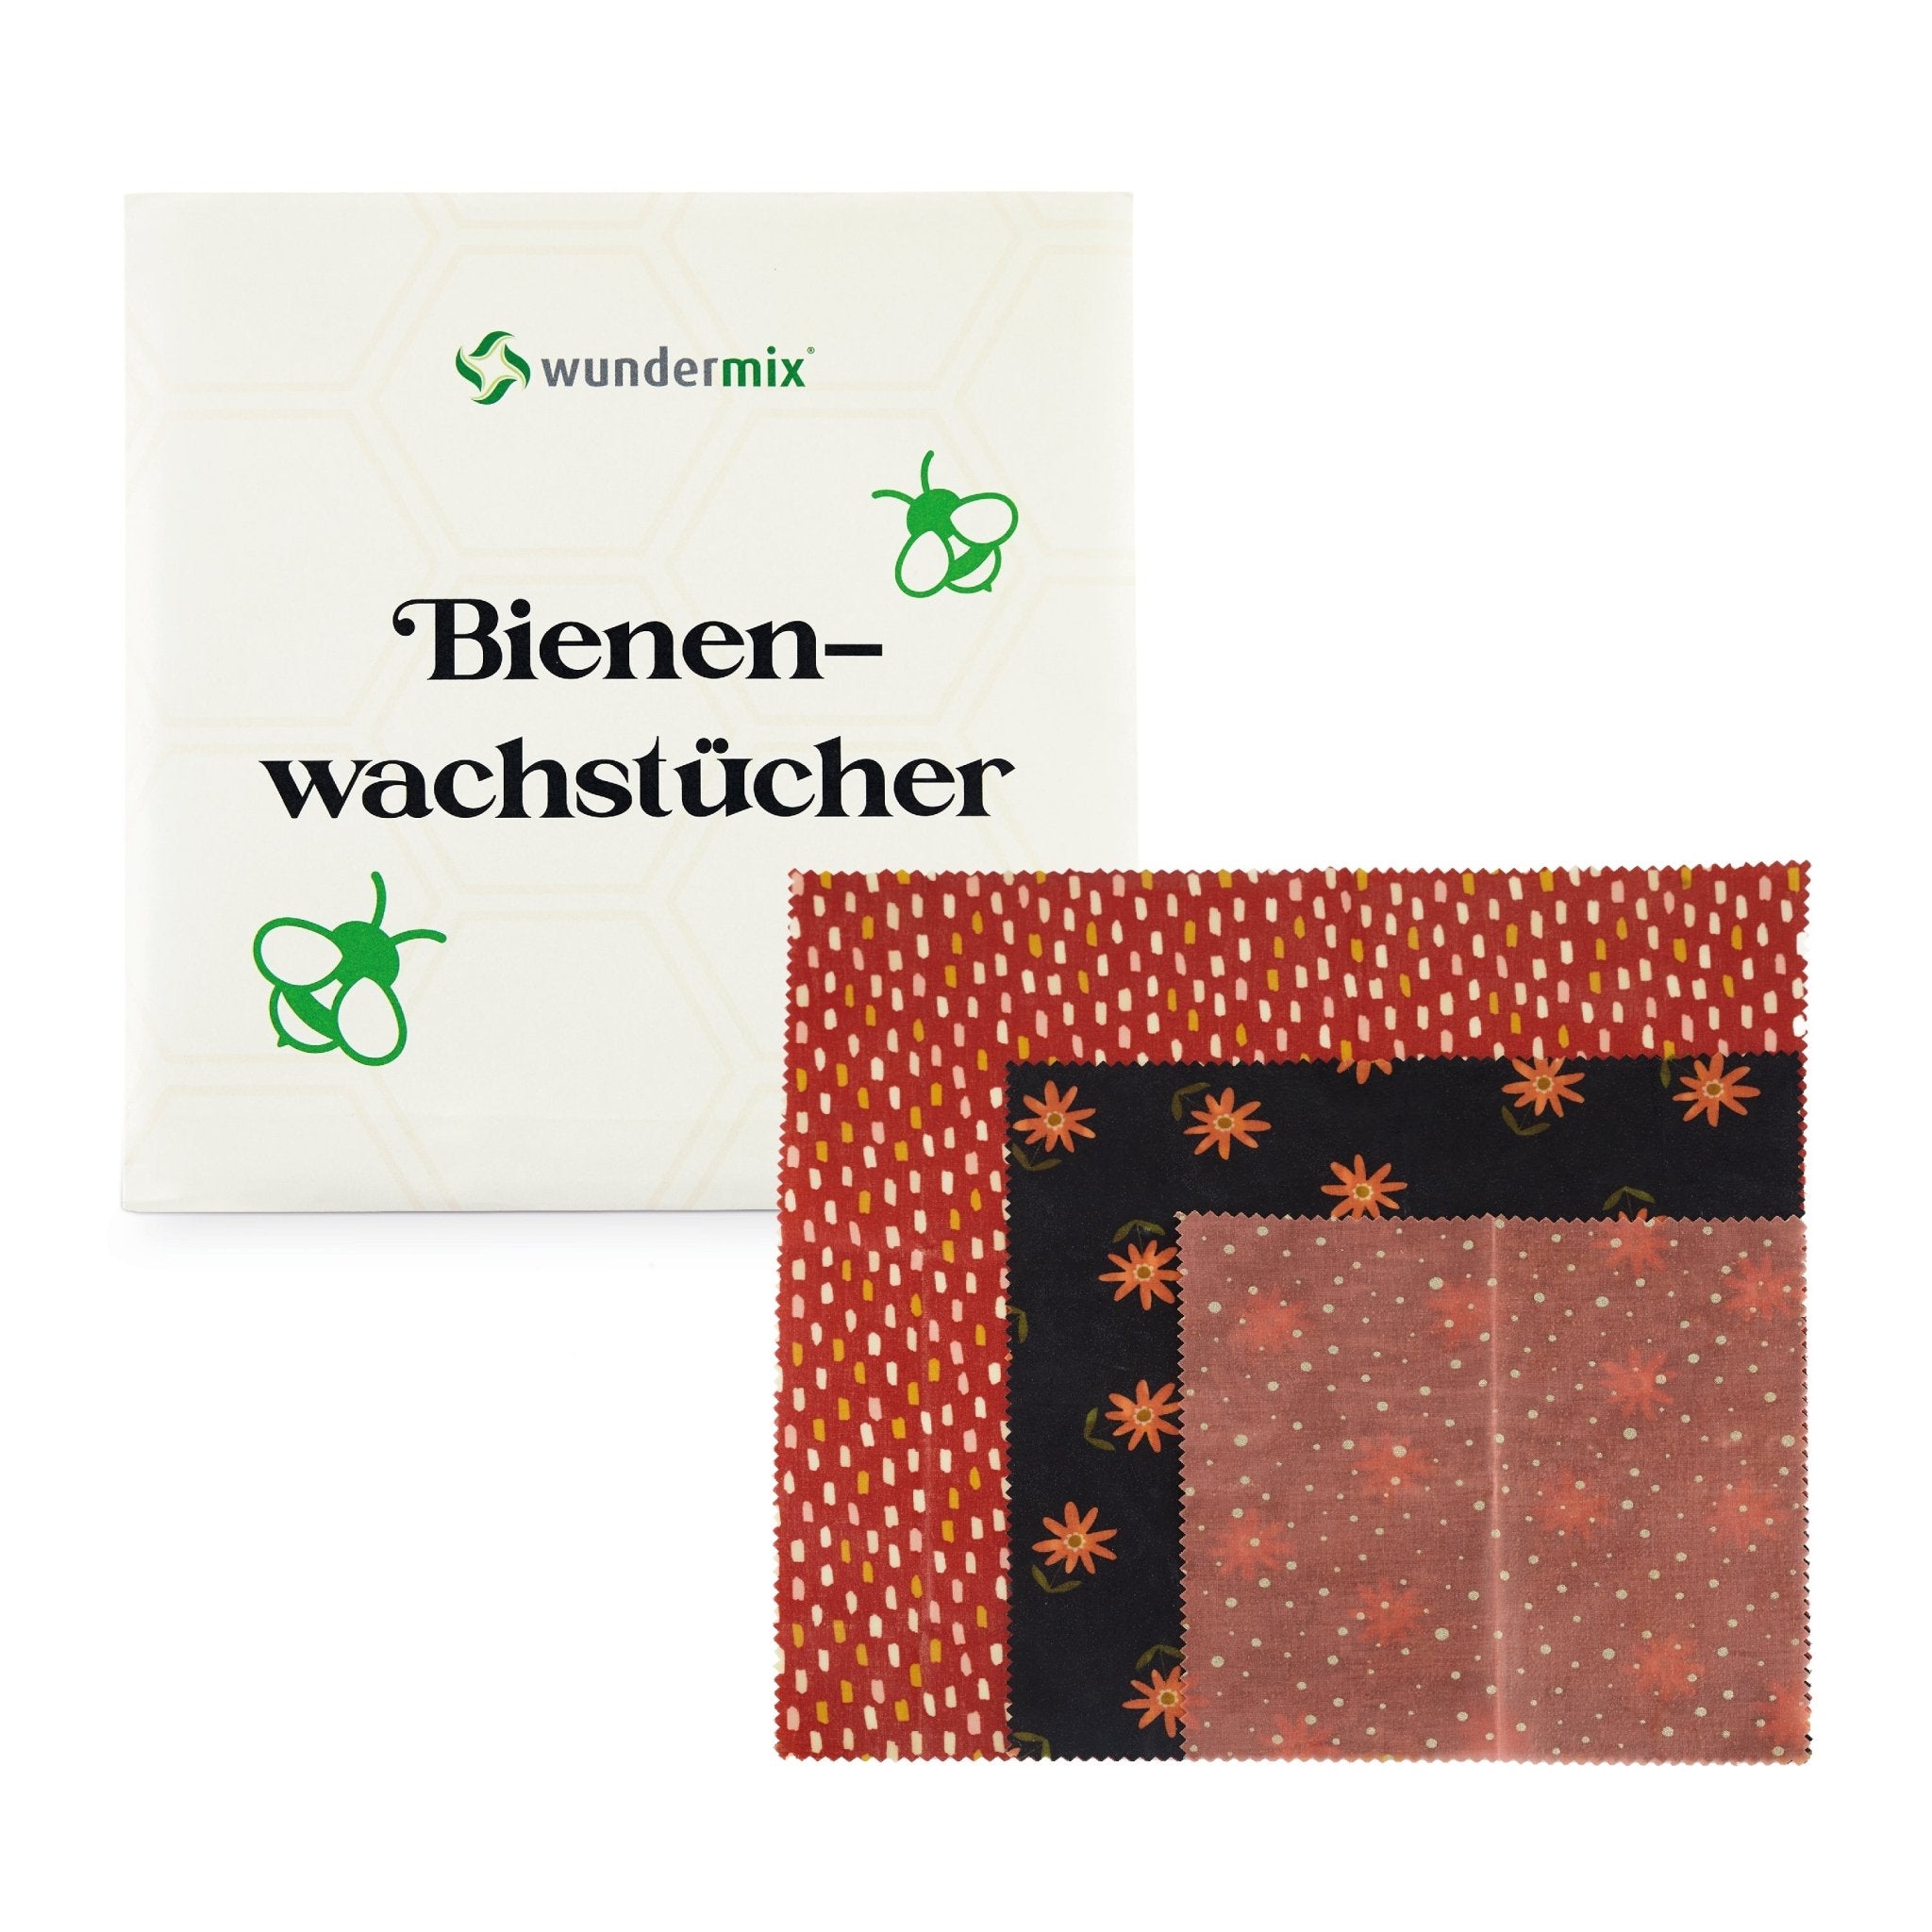 Wundermix Bienenwachstücher 3er-Set | Größe S/M/L «Flower» - Wundermix GmbH